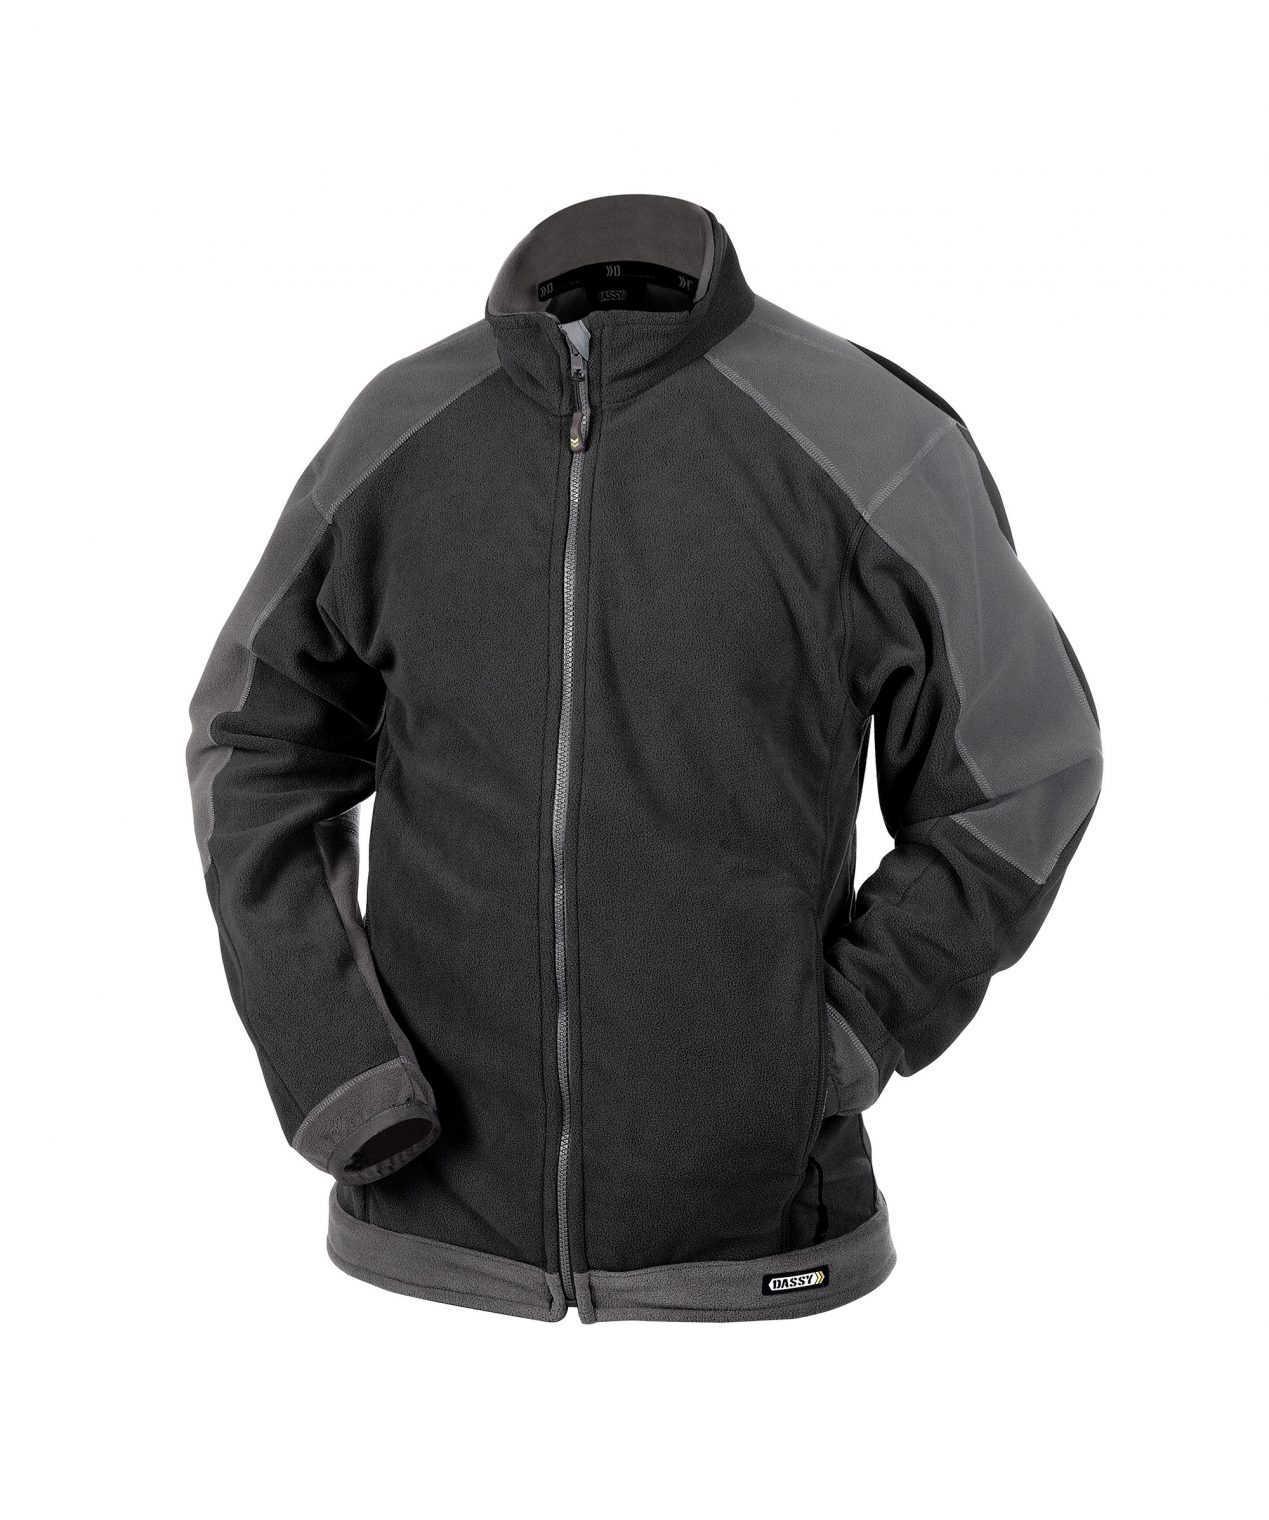 kazan two tone fleece jacket black cement grey front